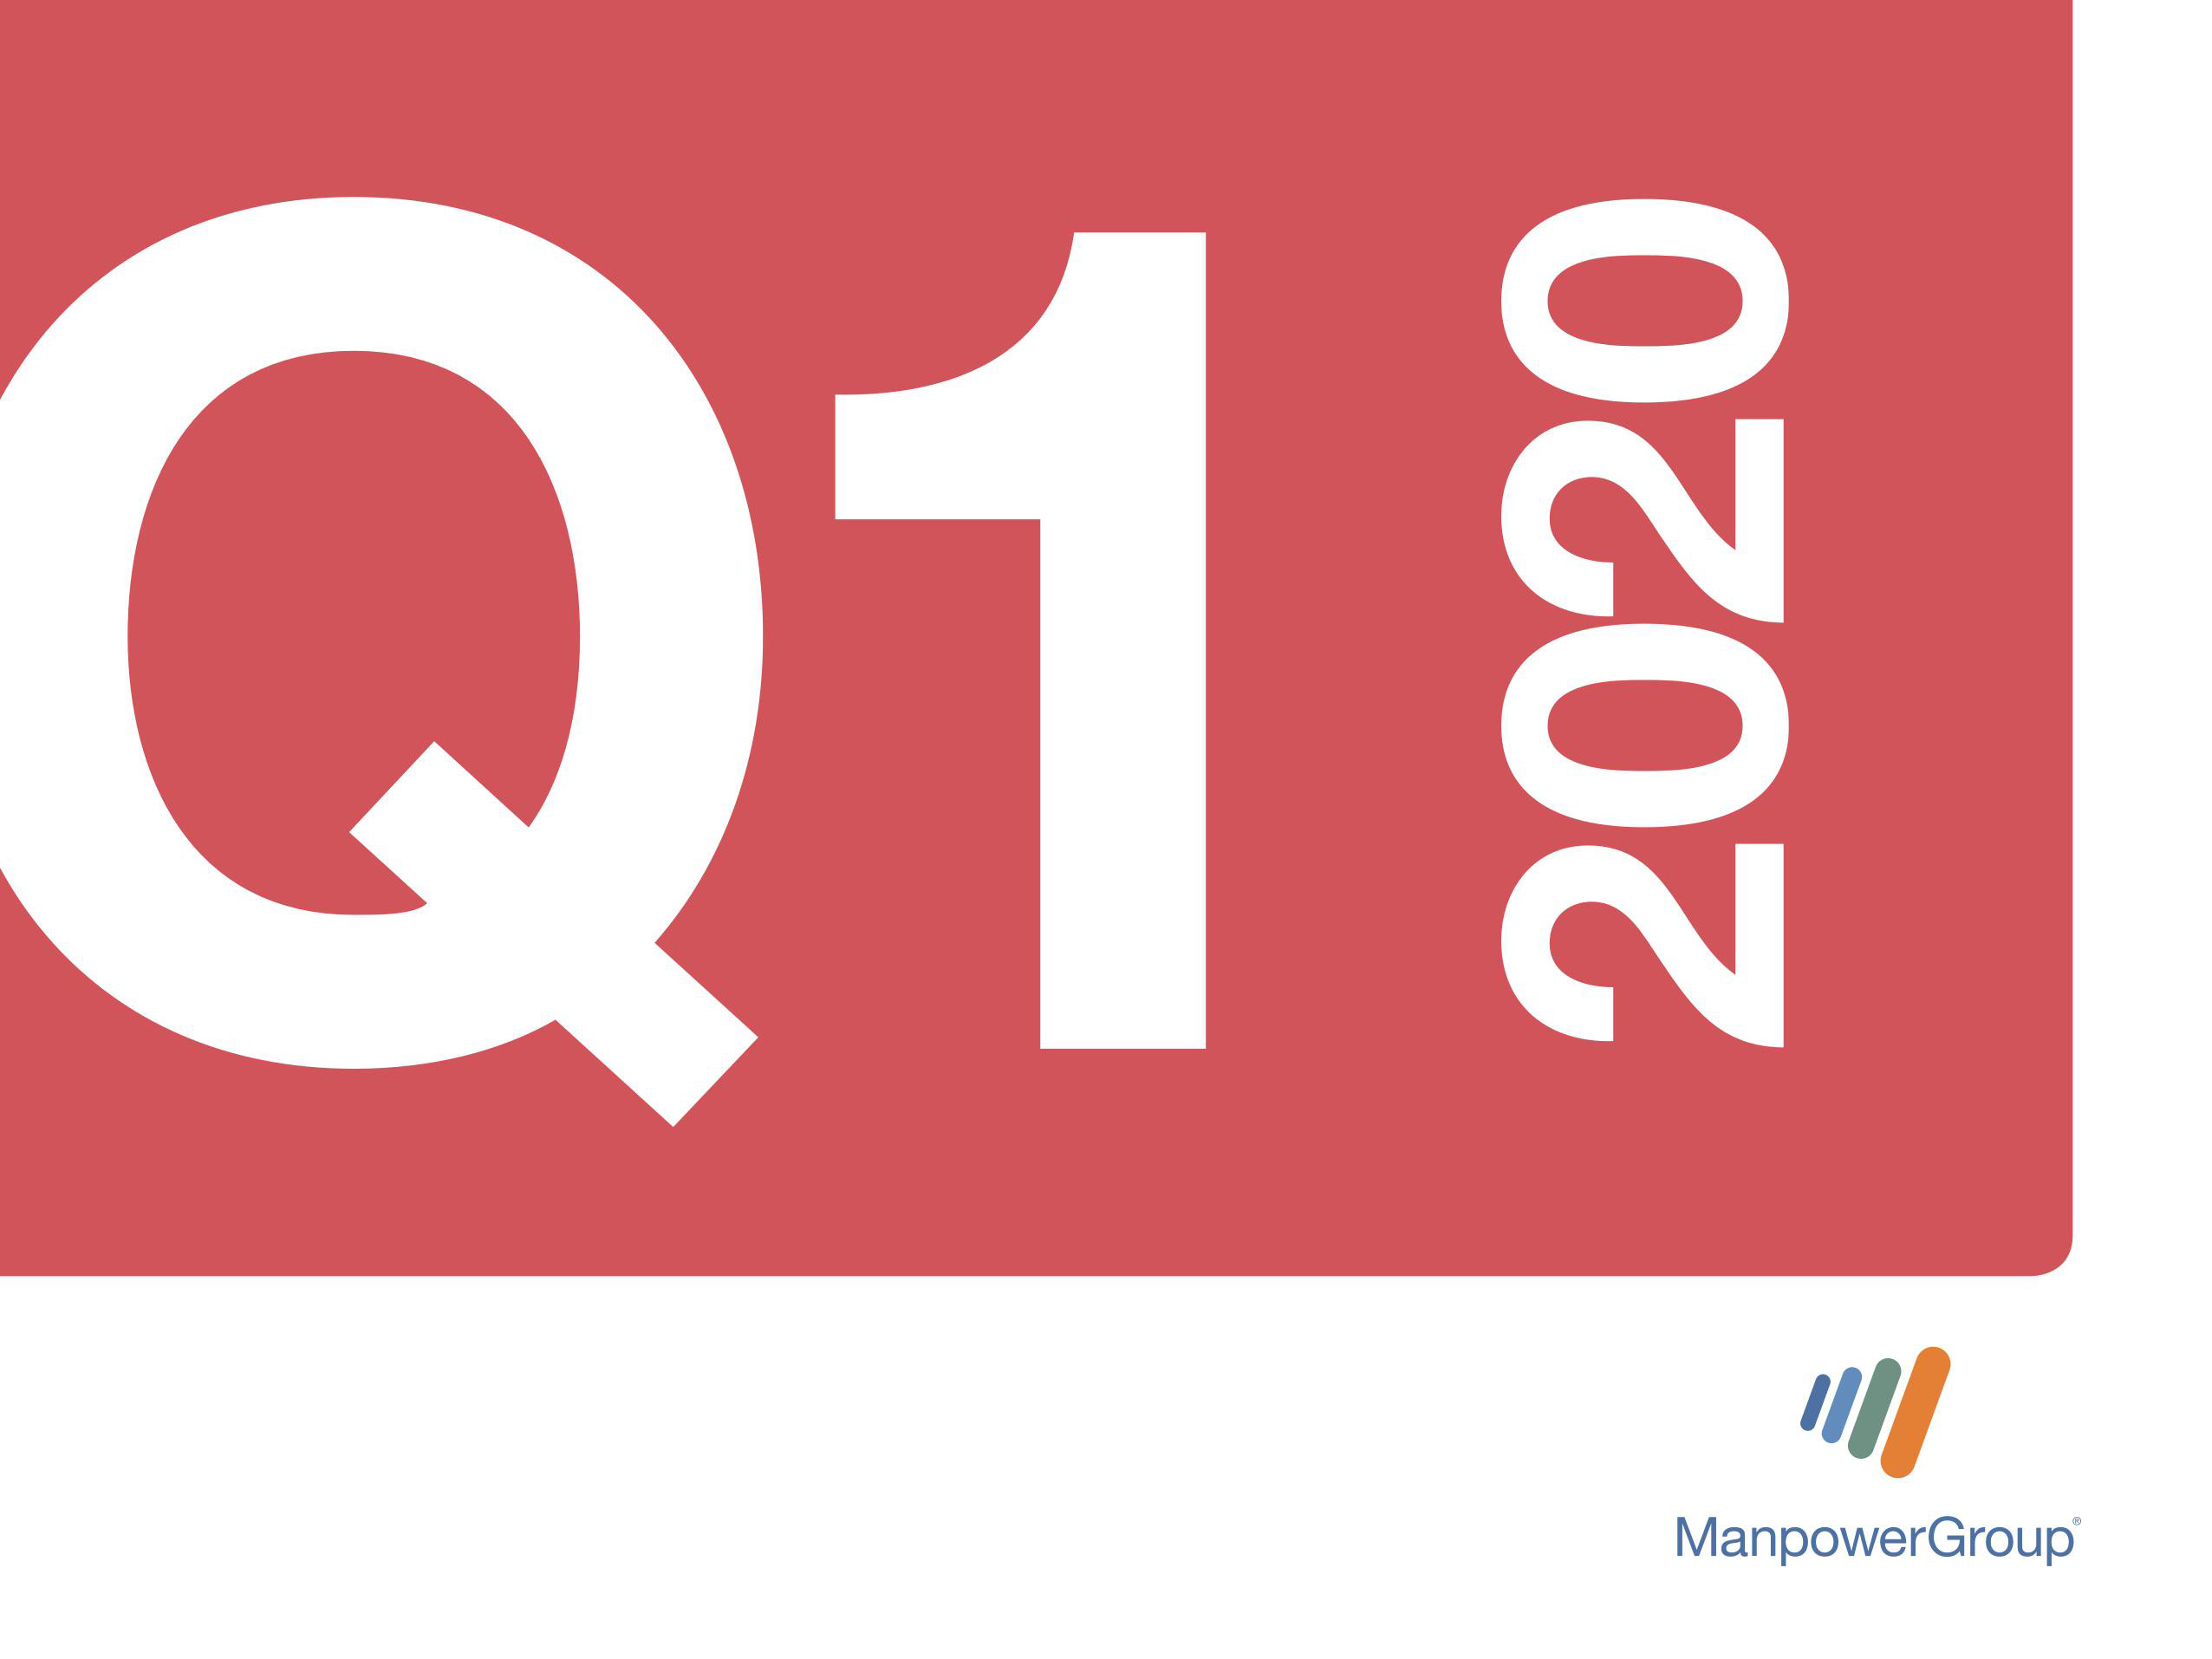 Q120 ManpowerGroup Employment Outlook Survey